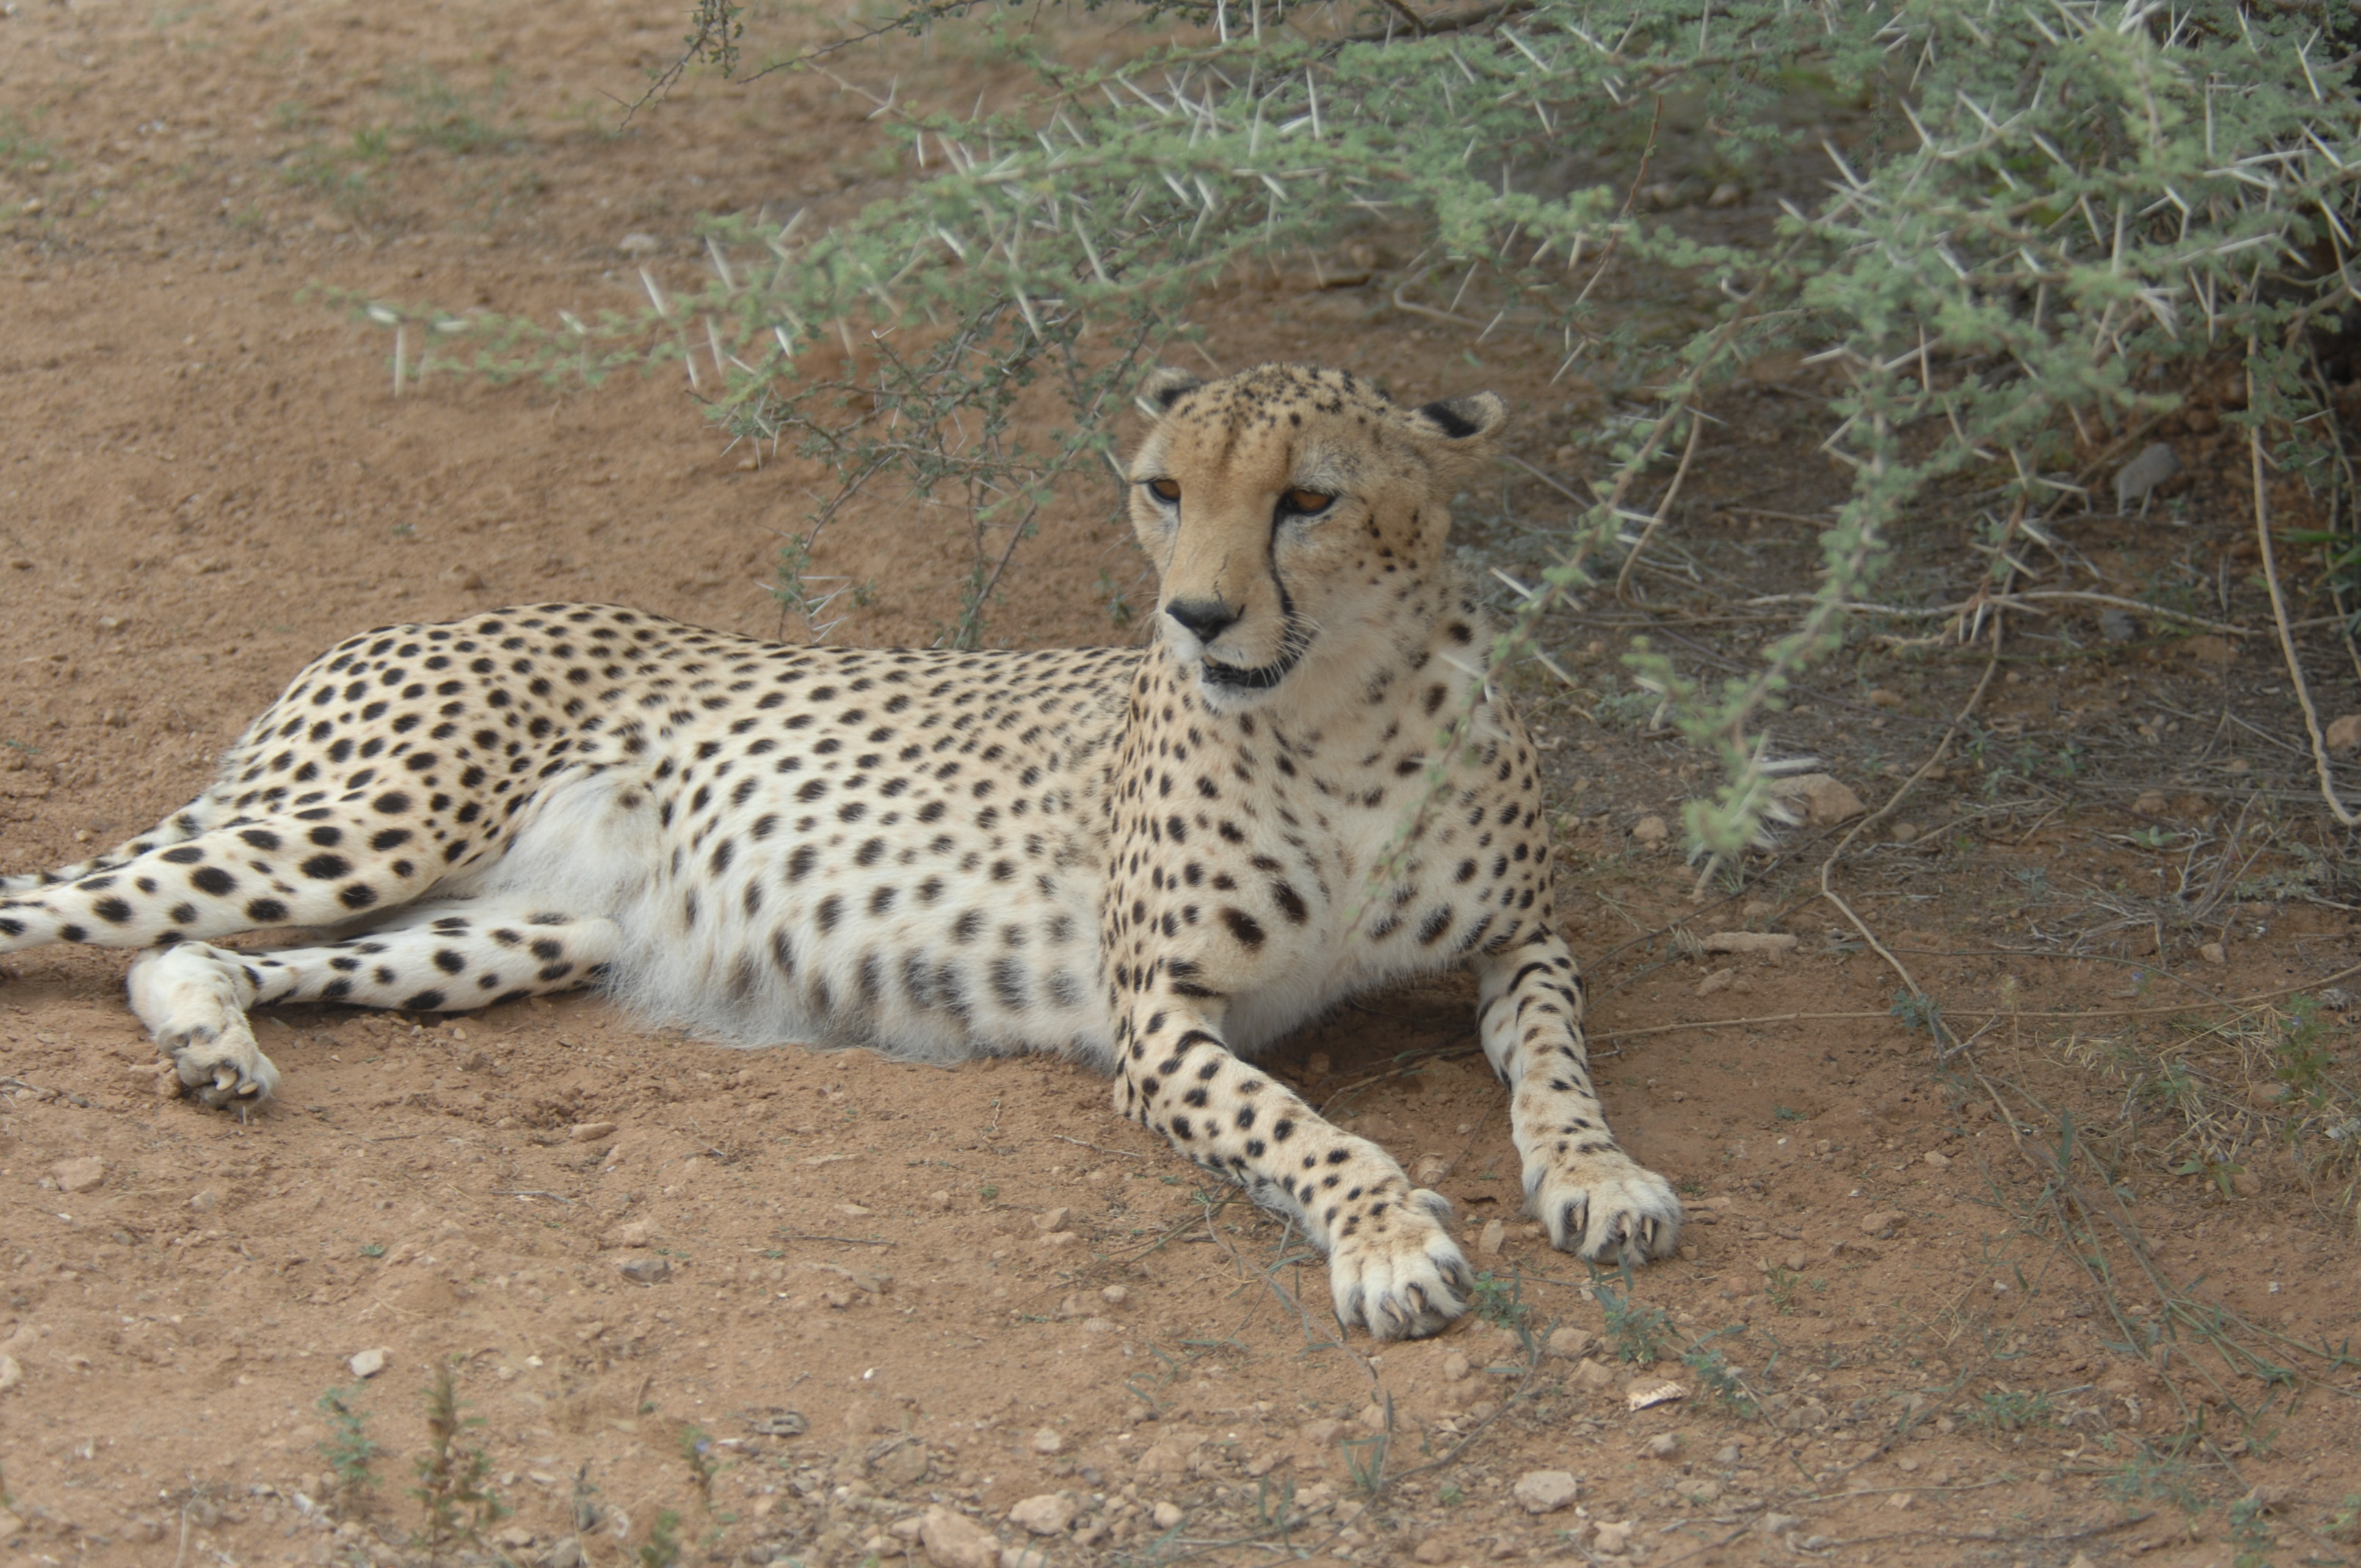 North African cheetah. Image credit: Sgt. Joe Zuccaro, Creative Commons